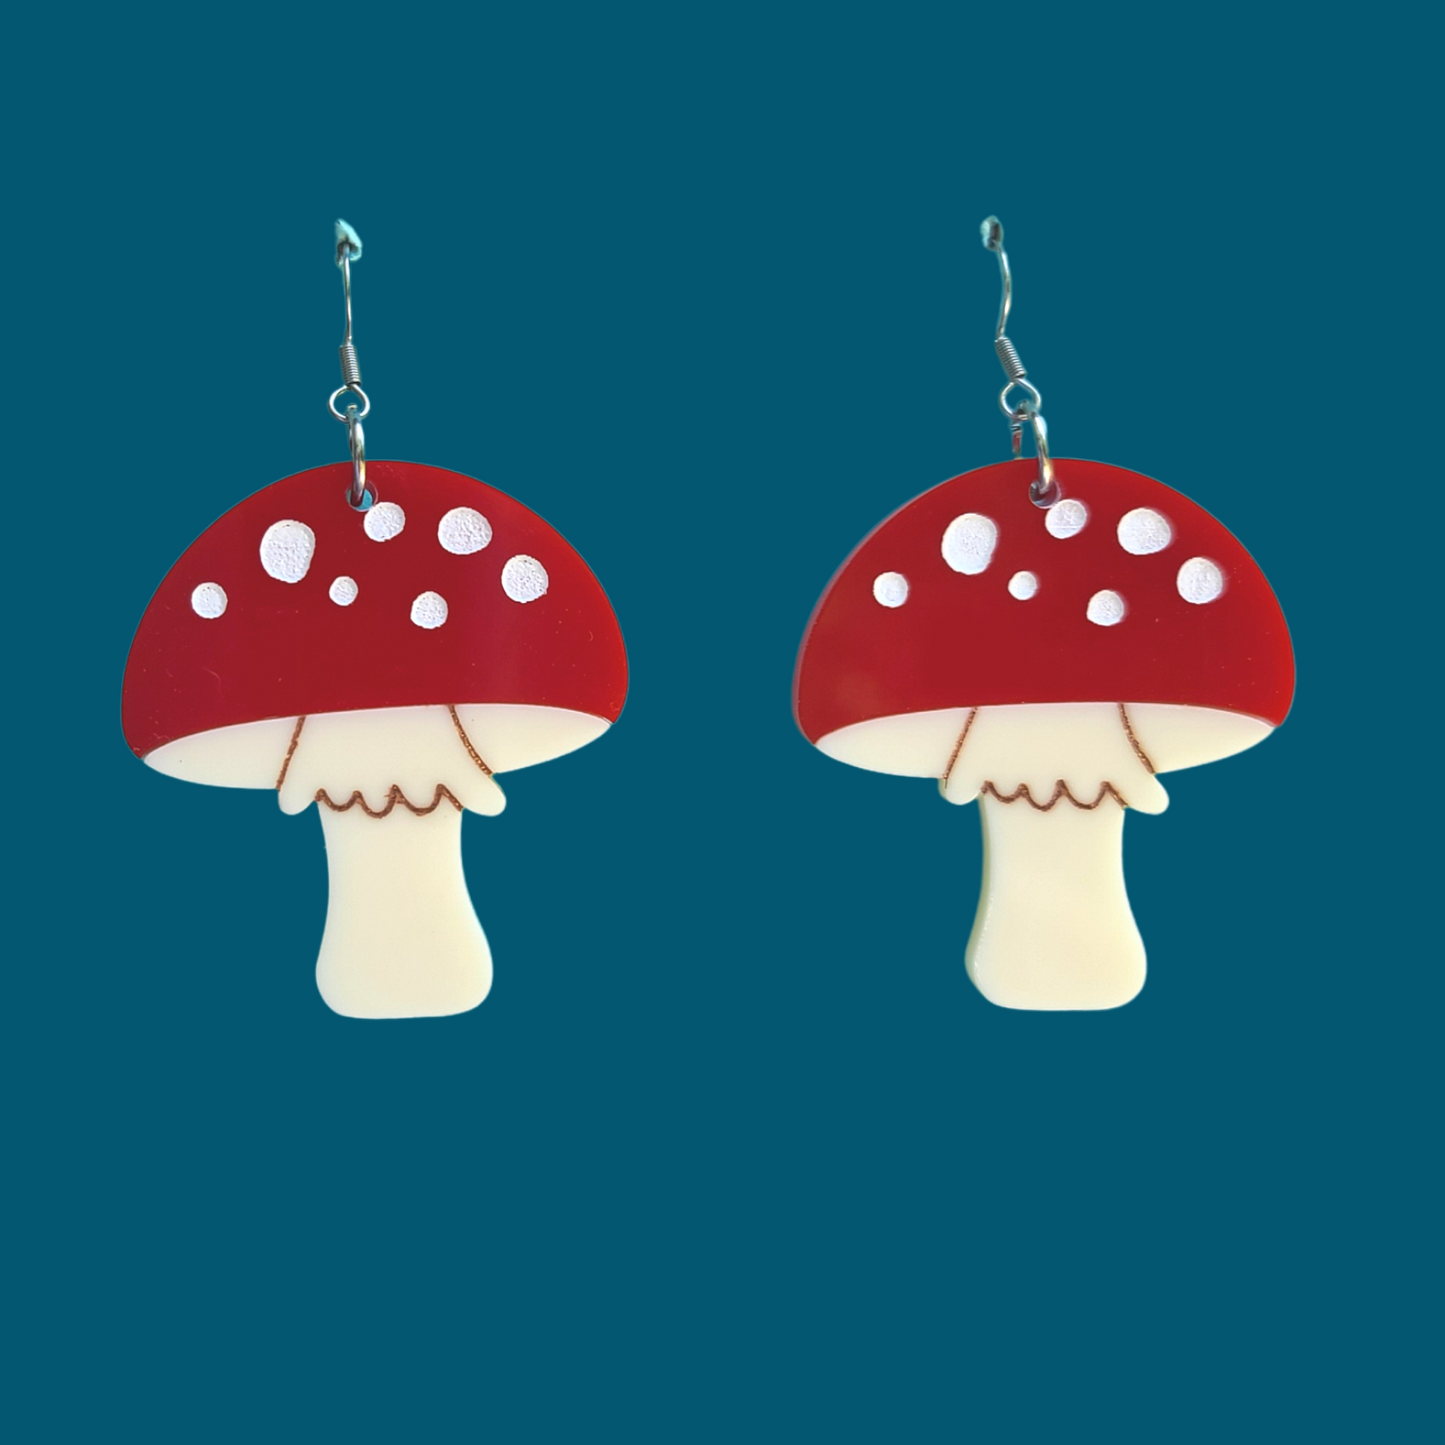 Red Capped Mushrooms - Laser Cut Earrings